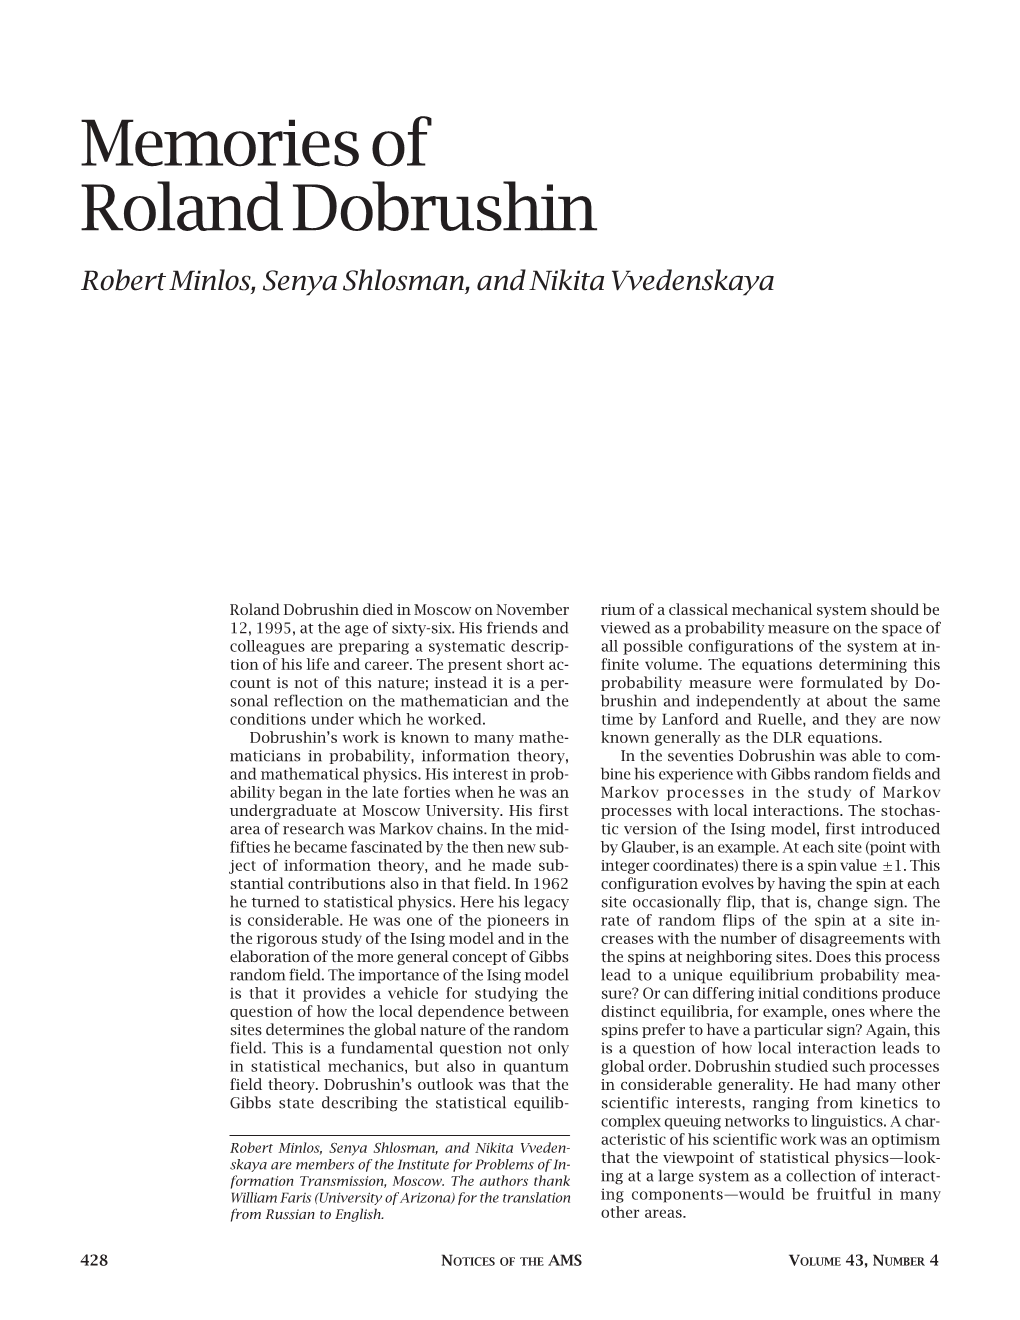 Memories of Roland Dobrushin Robert Minlos, Senya Shlosman, and Nikita Vvedenskaya